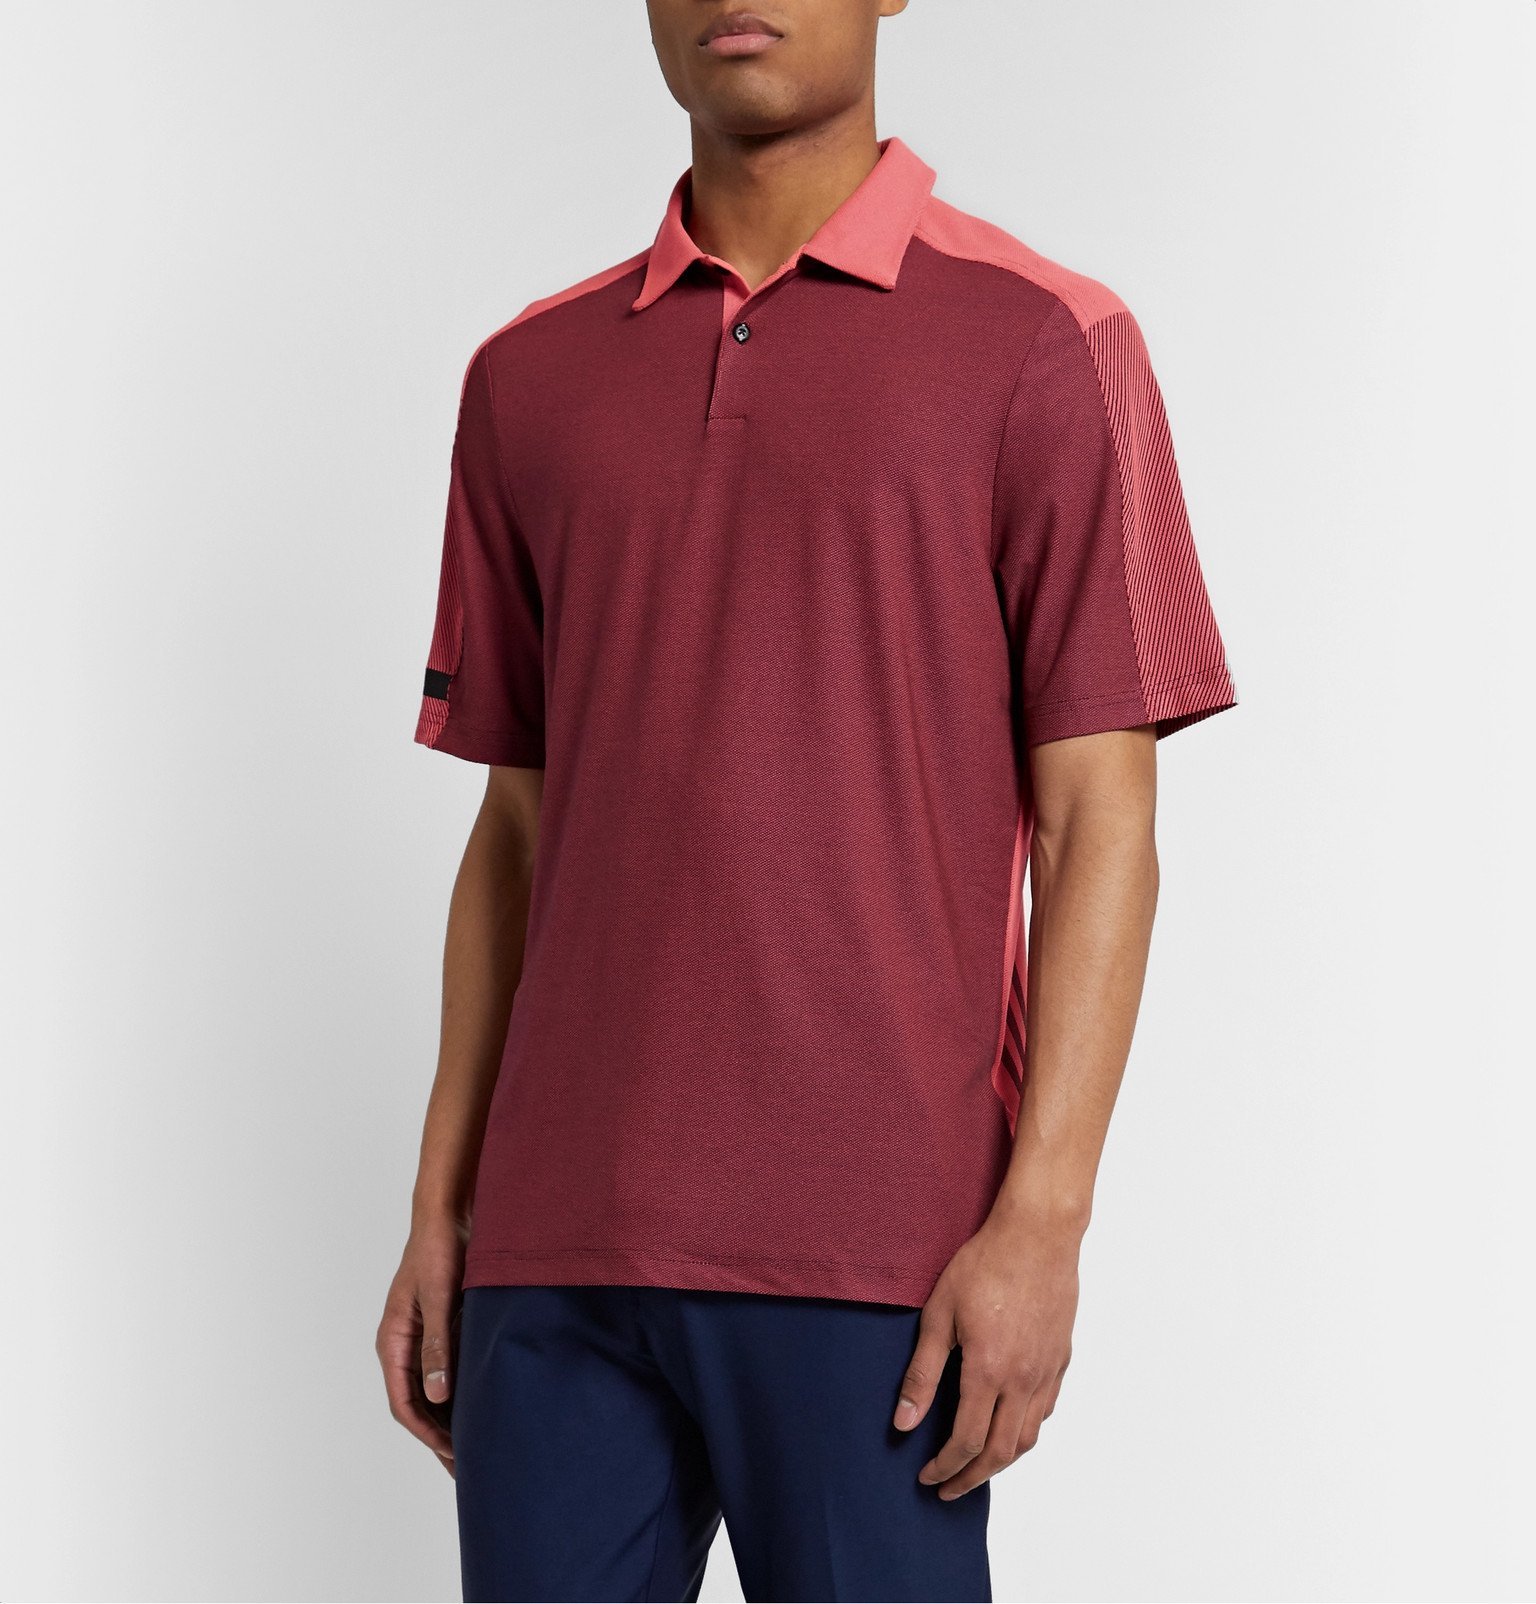 red adidas golf shirt